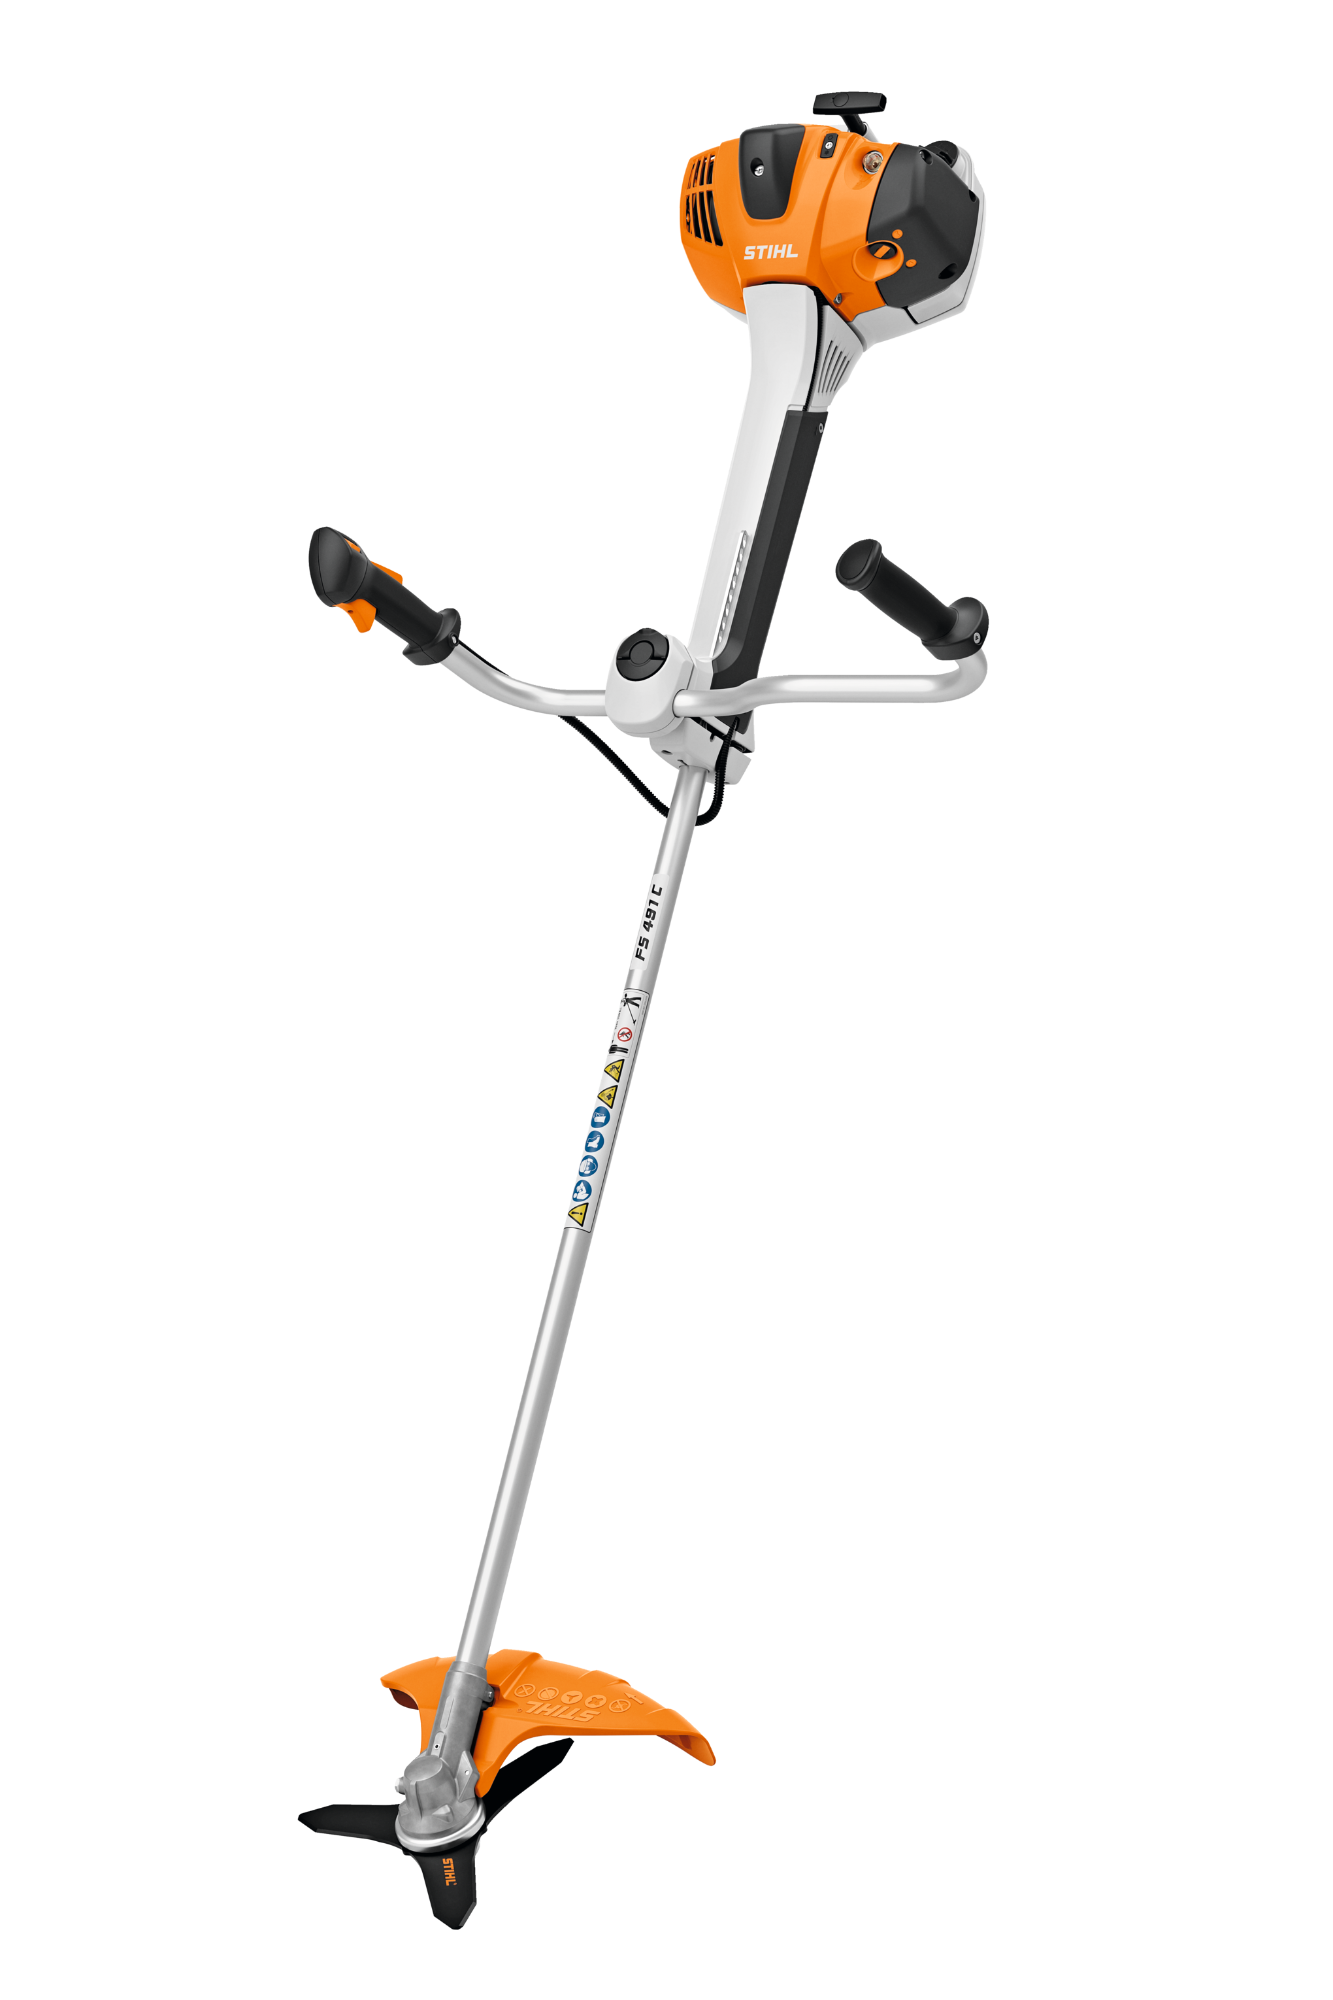 Galinga krūmpajovė STIHL FS 491 C-EM su trišakiu peiliu